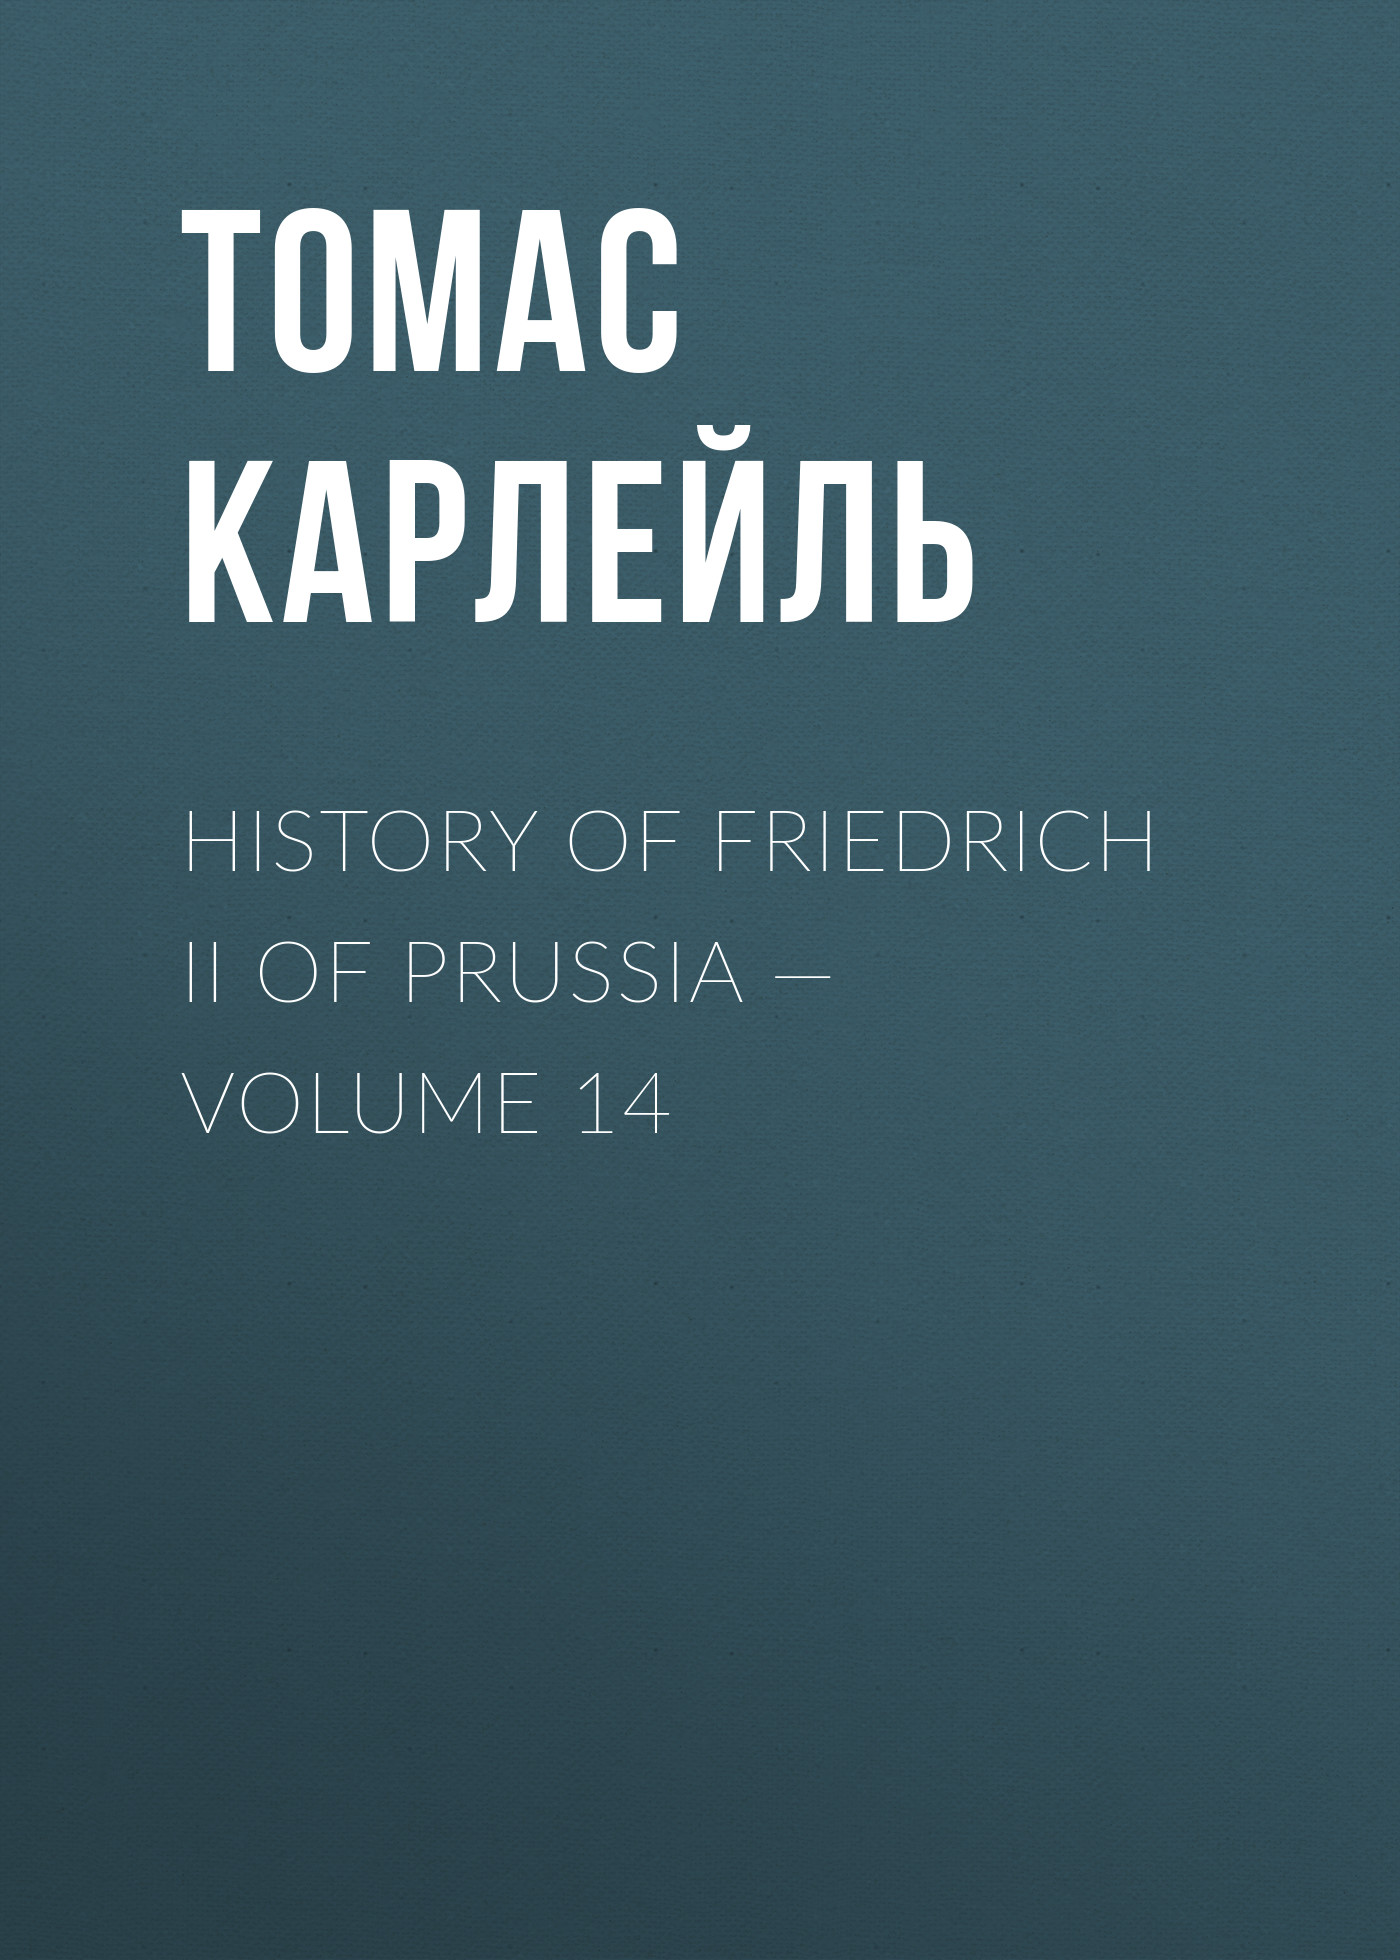 History of Friedrich II of Prussia— Volume 14